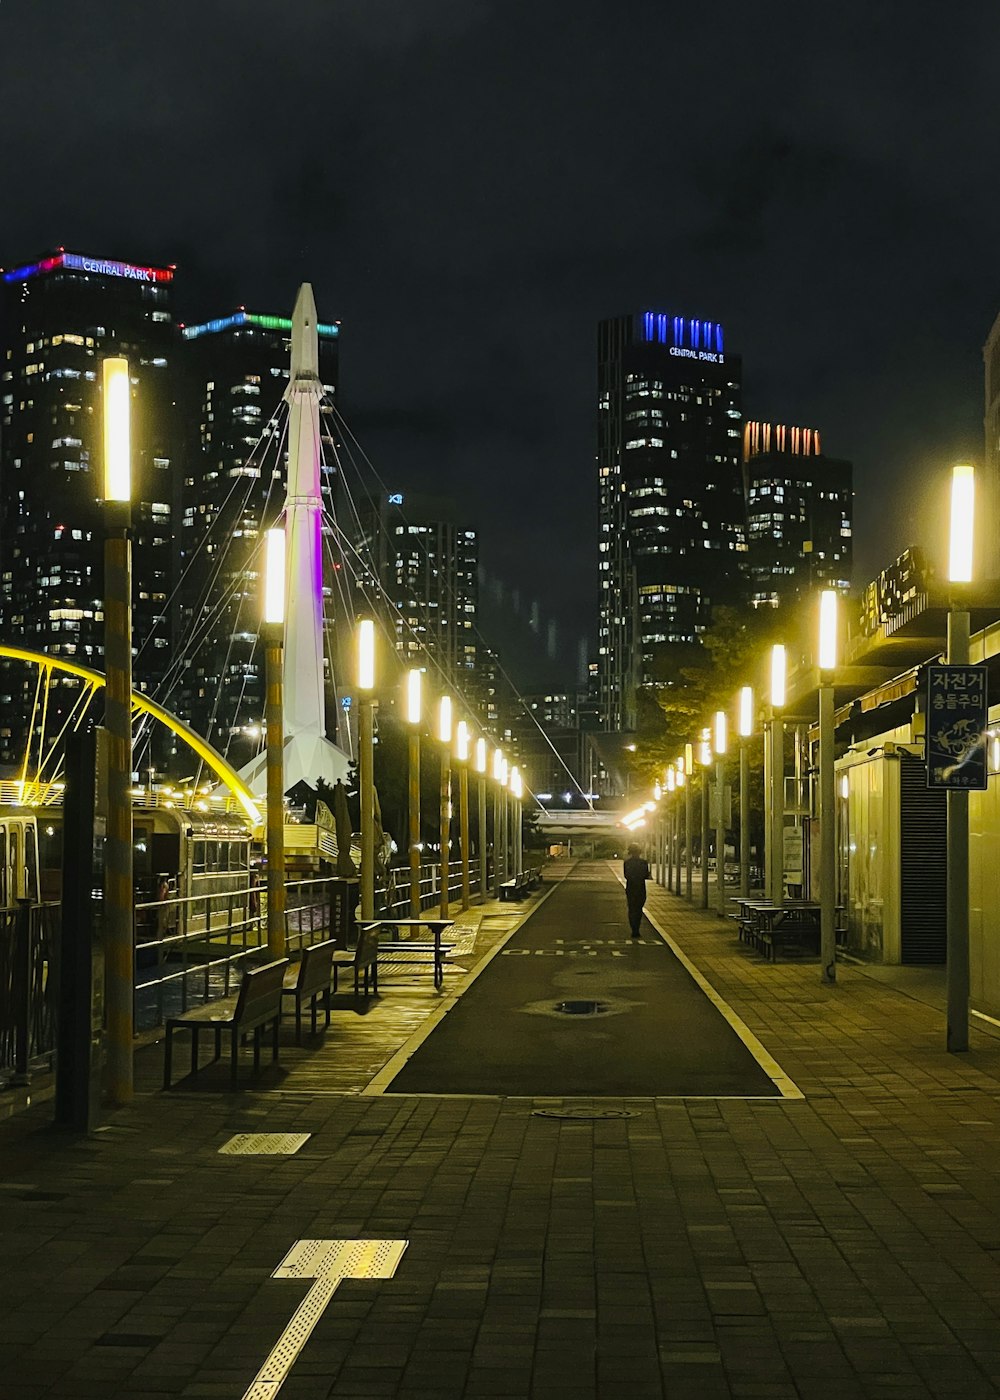 a city street at night